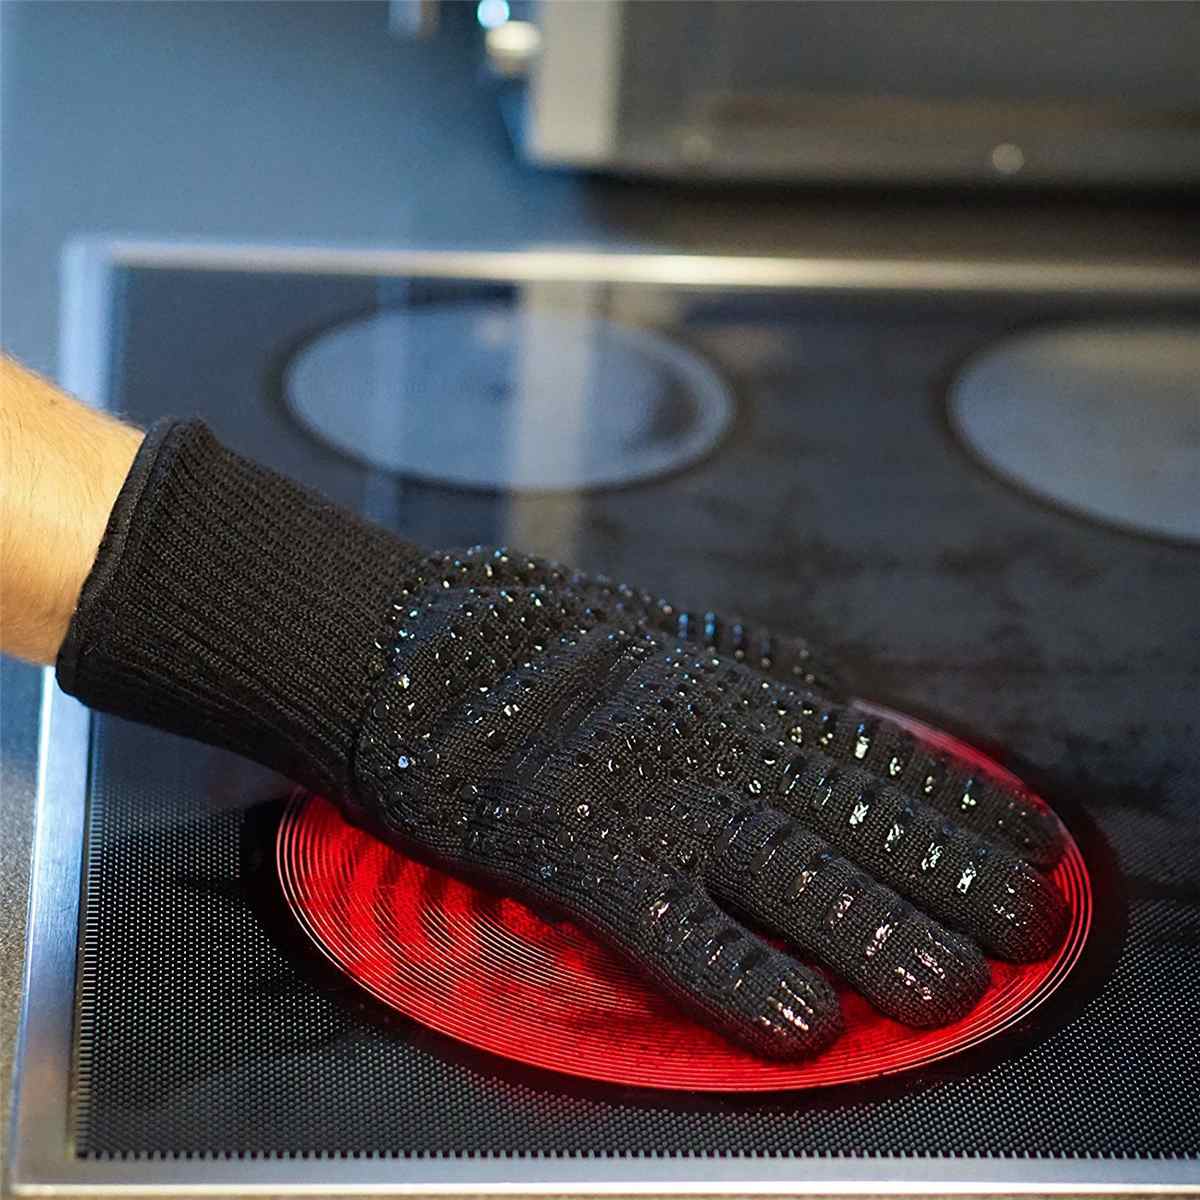 35 Cm 1 Pcs Silicone Hittebestendige Ovenwanten Coing Bbq Antislip Handschoen Hittebestendig Keuken bakken Tools Zwart